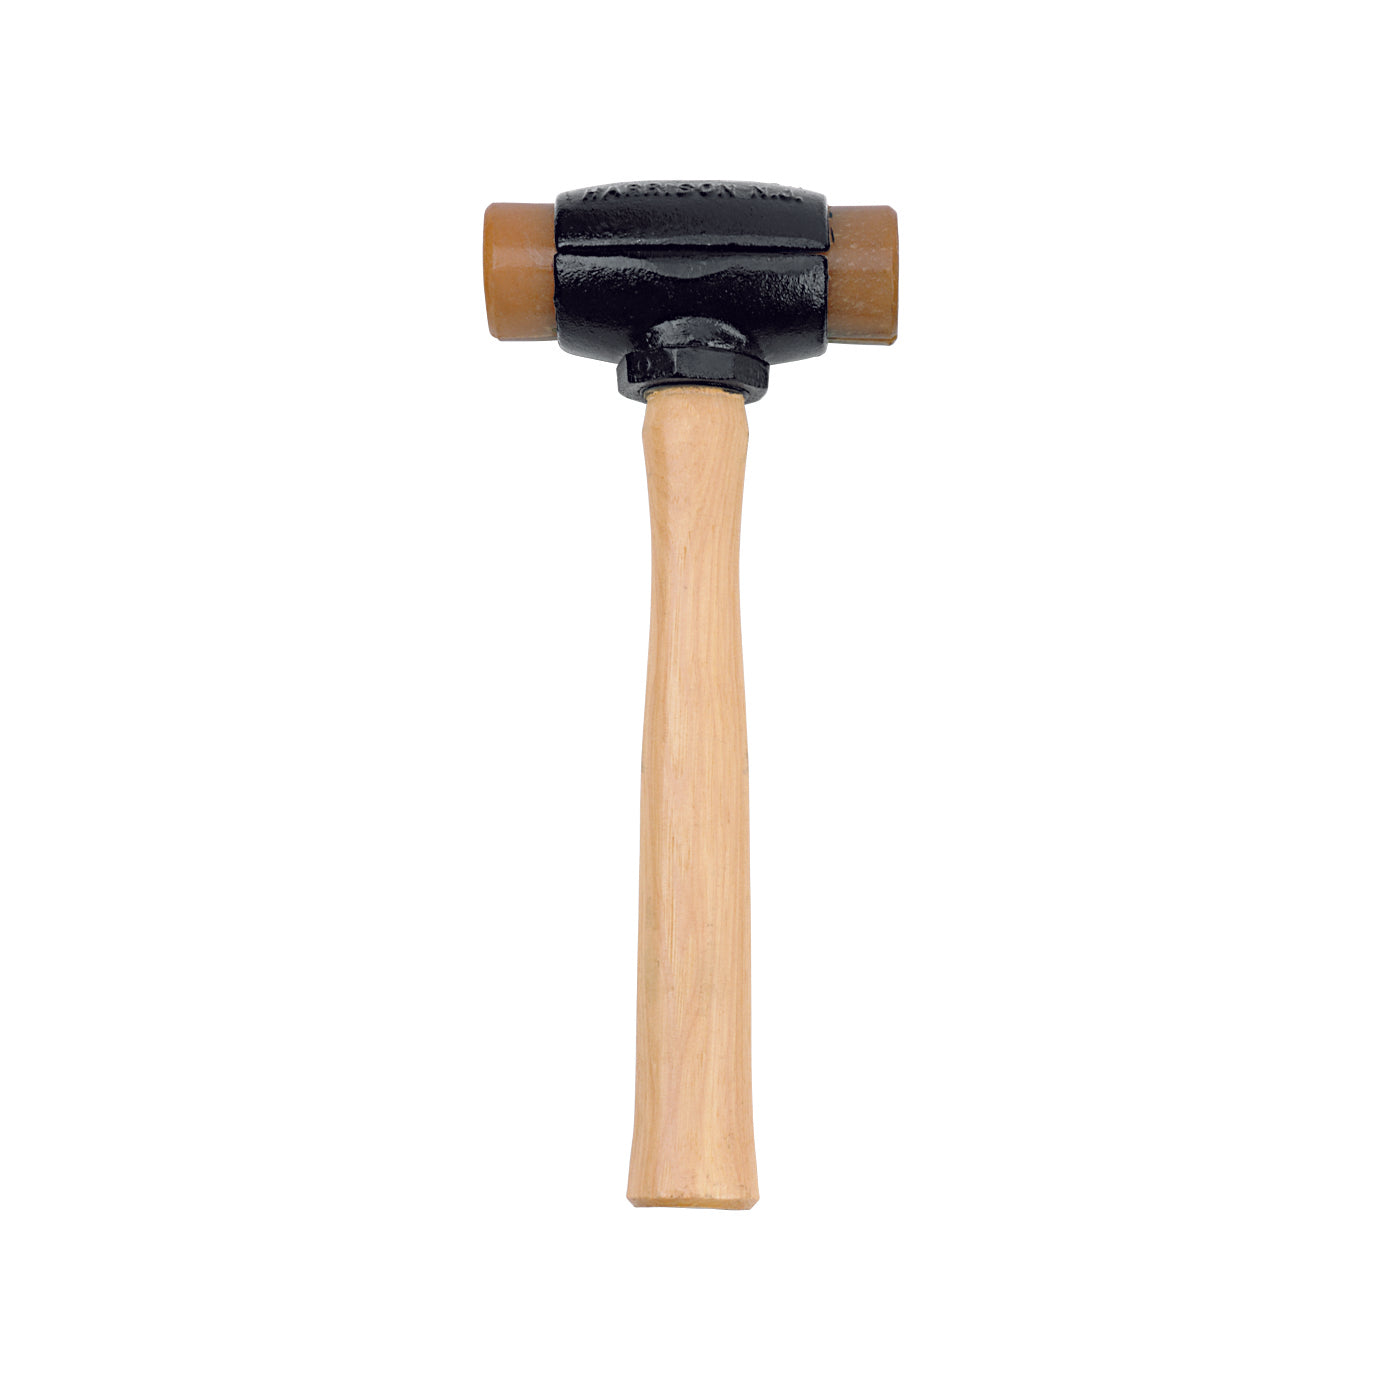 Rawhide Hammer with Split Head Size #3